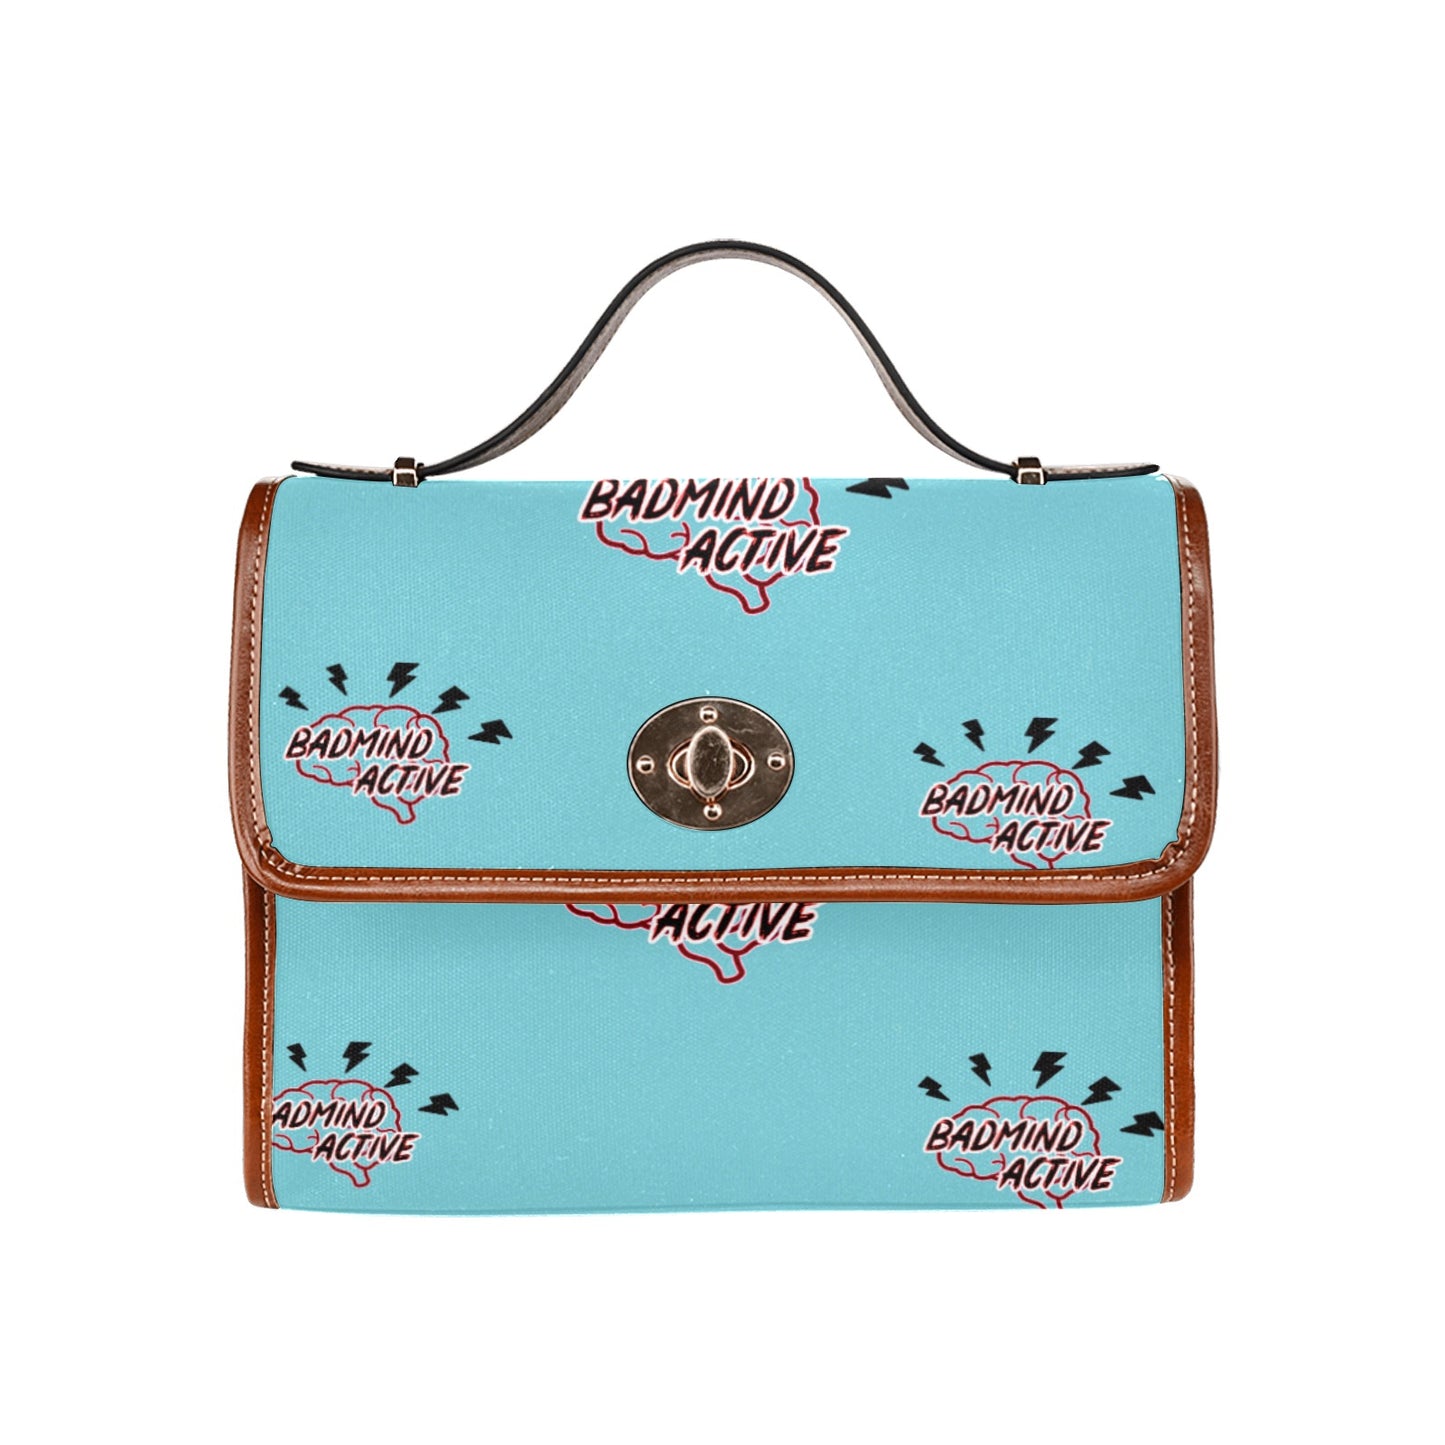 fz mind handbag one size / fz - mind bag-bluish all over print waterproof canvas bag(model1641)(brown strap)